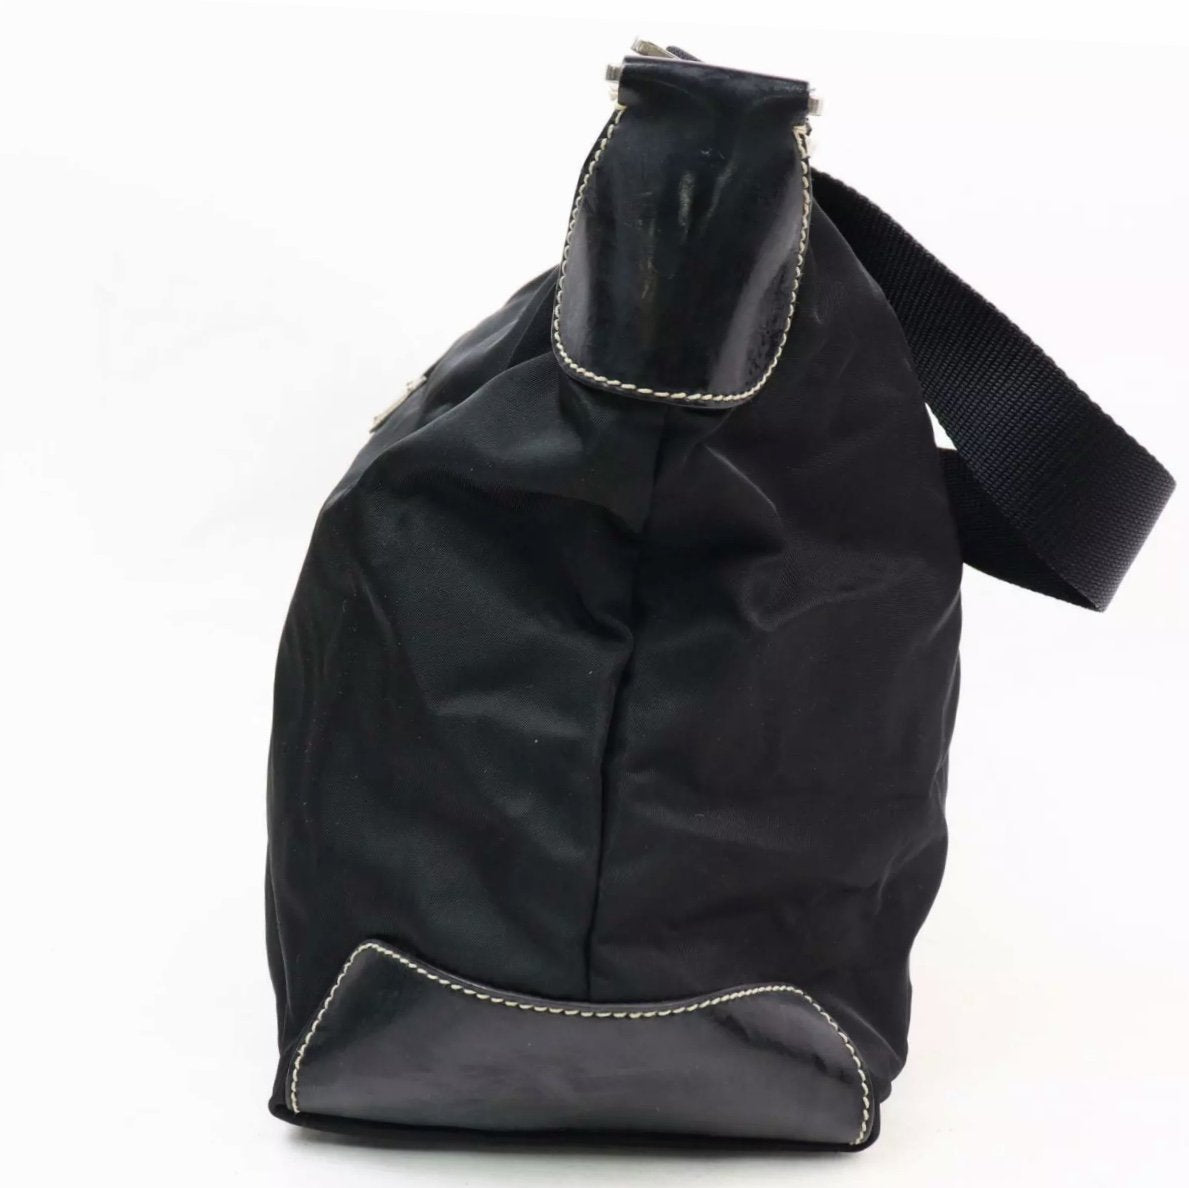 Sold at Auction: AUTHENTIC PRADA NYLON LEATHER SHOULDER BAG